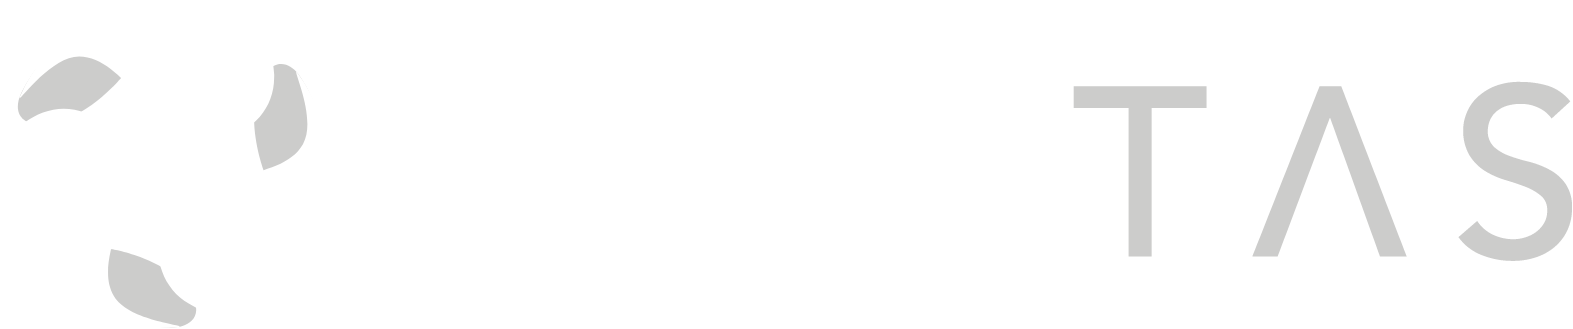 Civitas Resources logo large for dark backgrounds (transparent PNG)